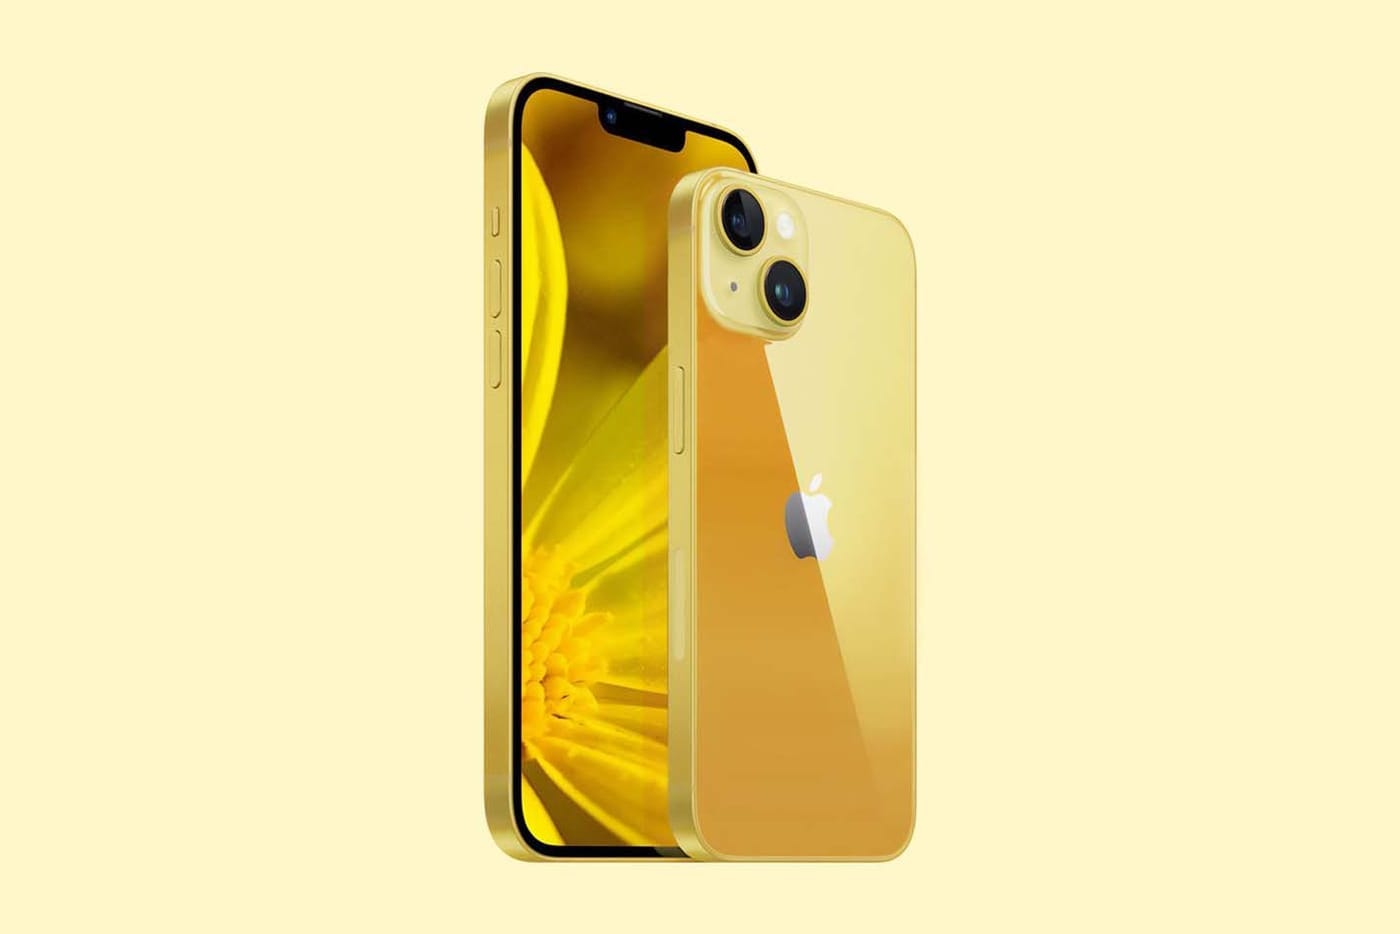 apple iPhone 14 new yellow color 2023 release rumor